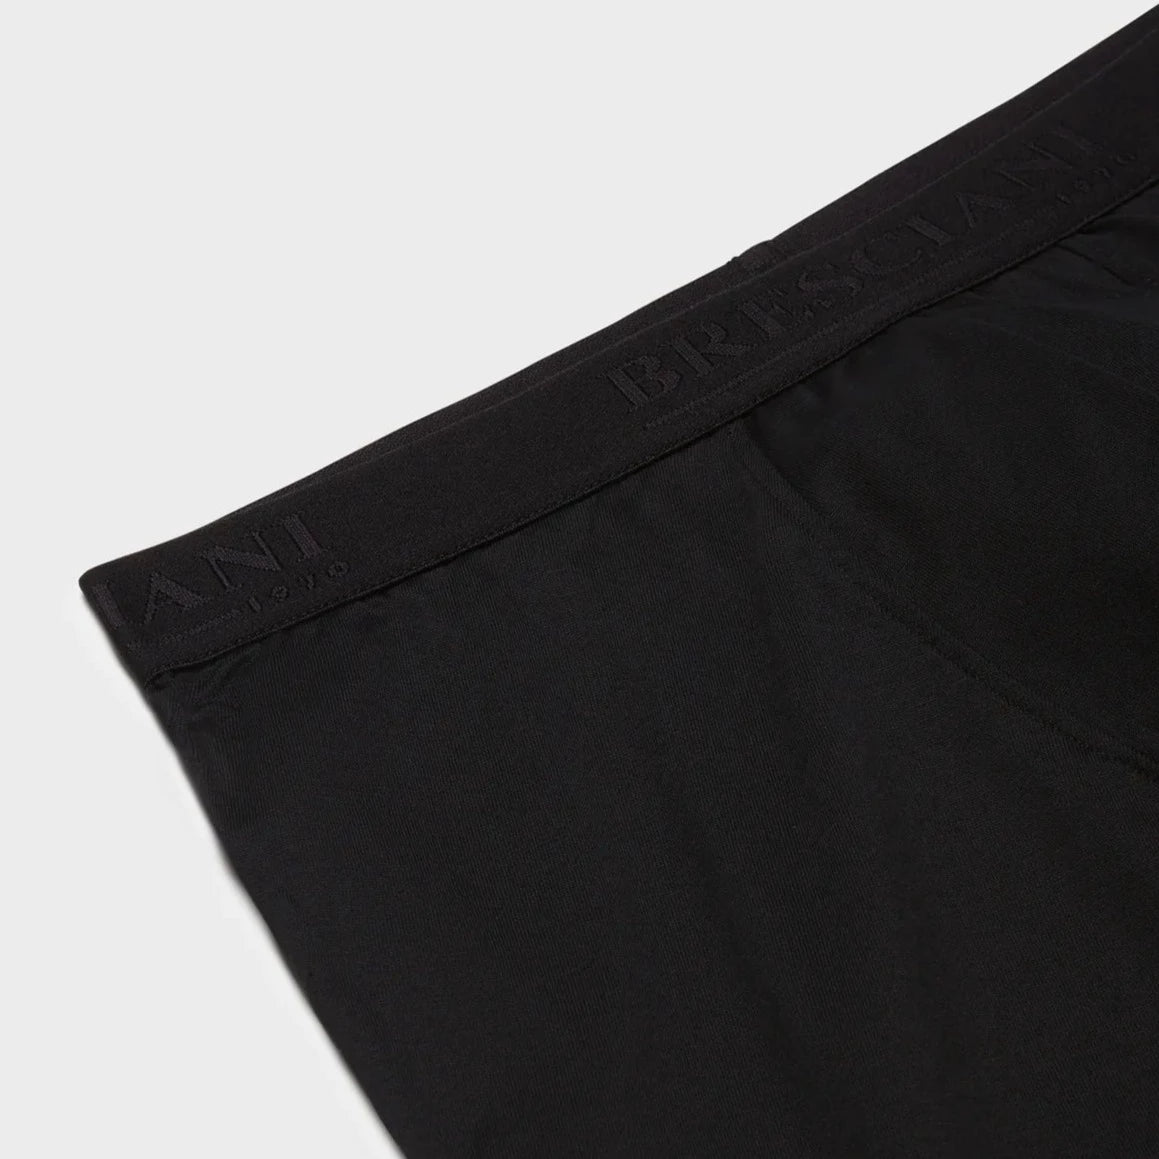 Bresciani 100% Cotton Knitted Boxer Shorts Black